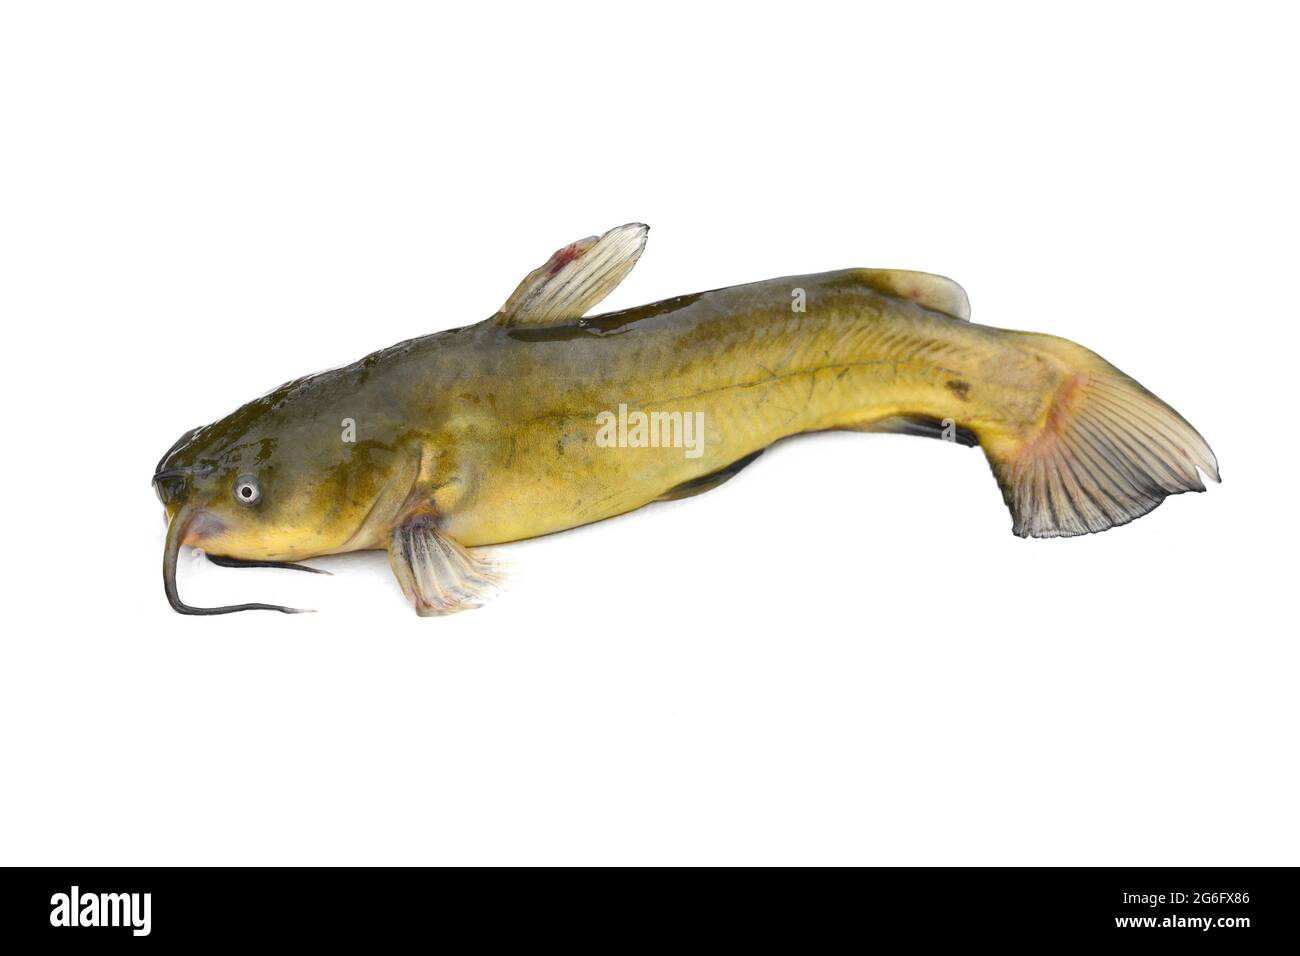 Brown bullhead or black bullhead catfish, Ameiurus melas isolated on white background. Stock Photo